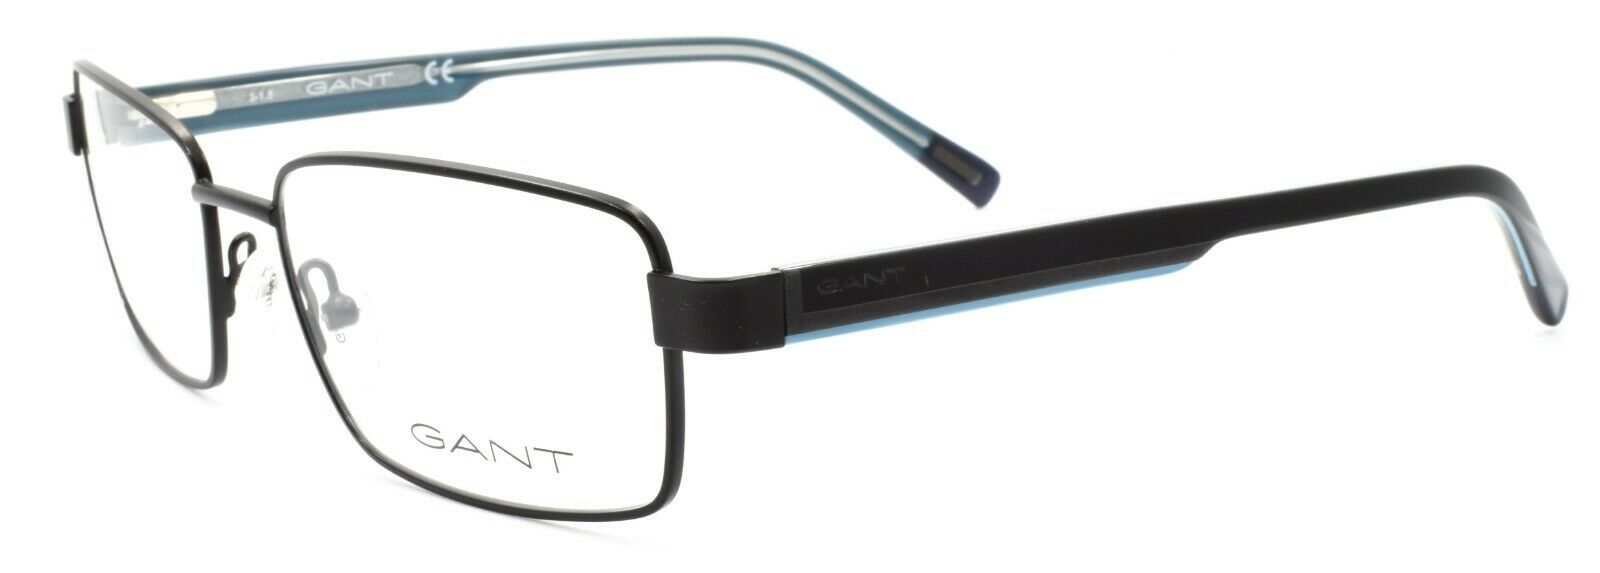 1-GANT GA3102 002 Men's Eyeglasses Frames 54-17-140 Matte Black + CASE-664689746347-IKSpecs